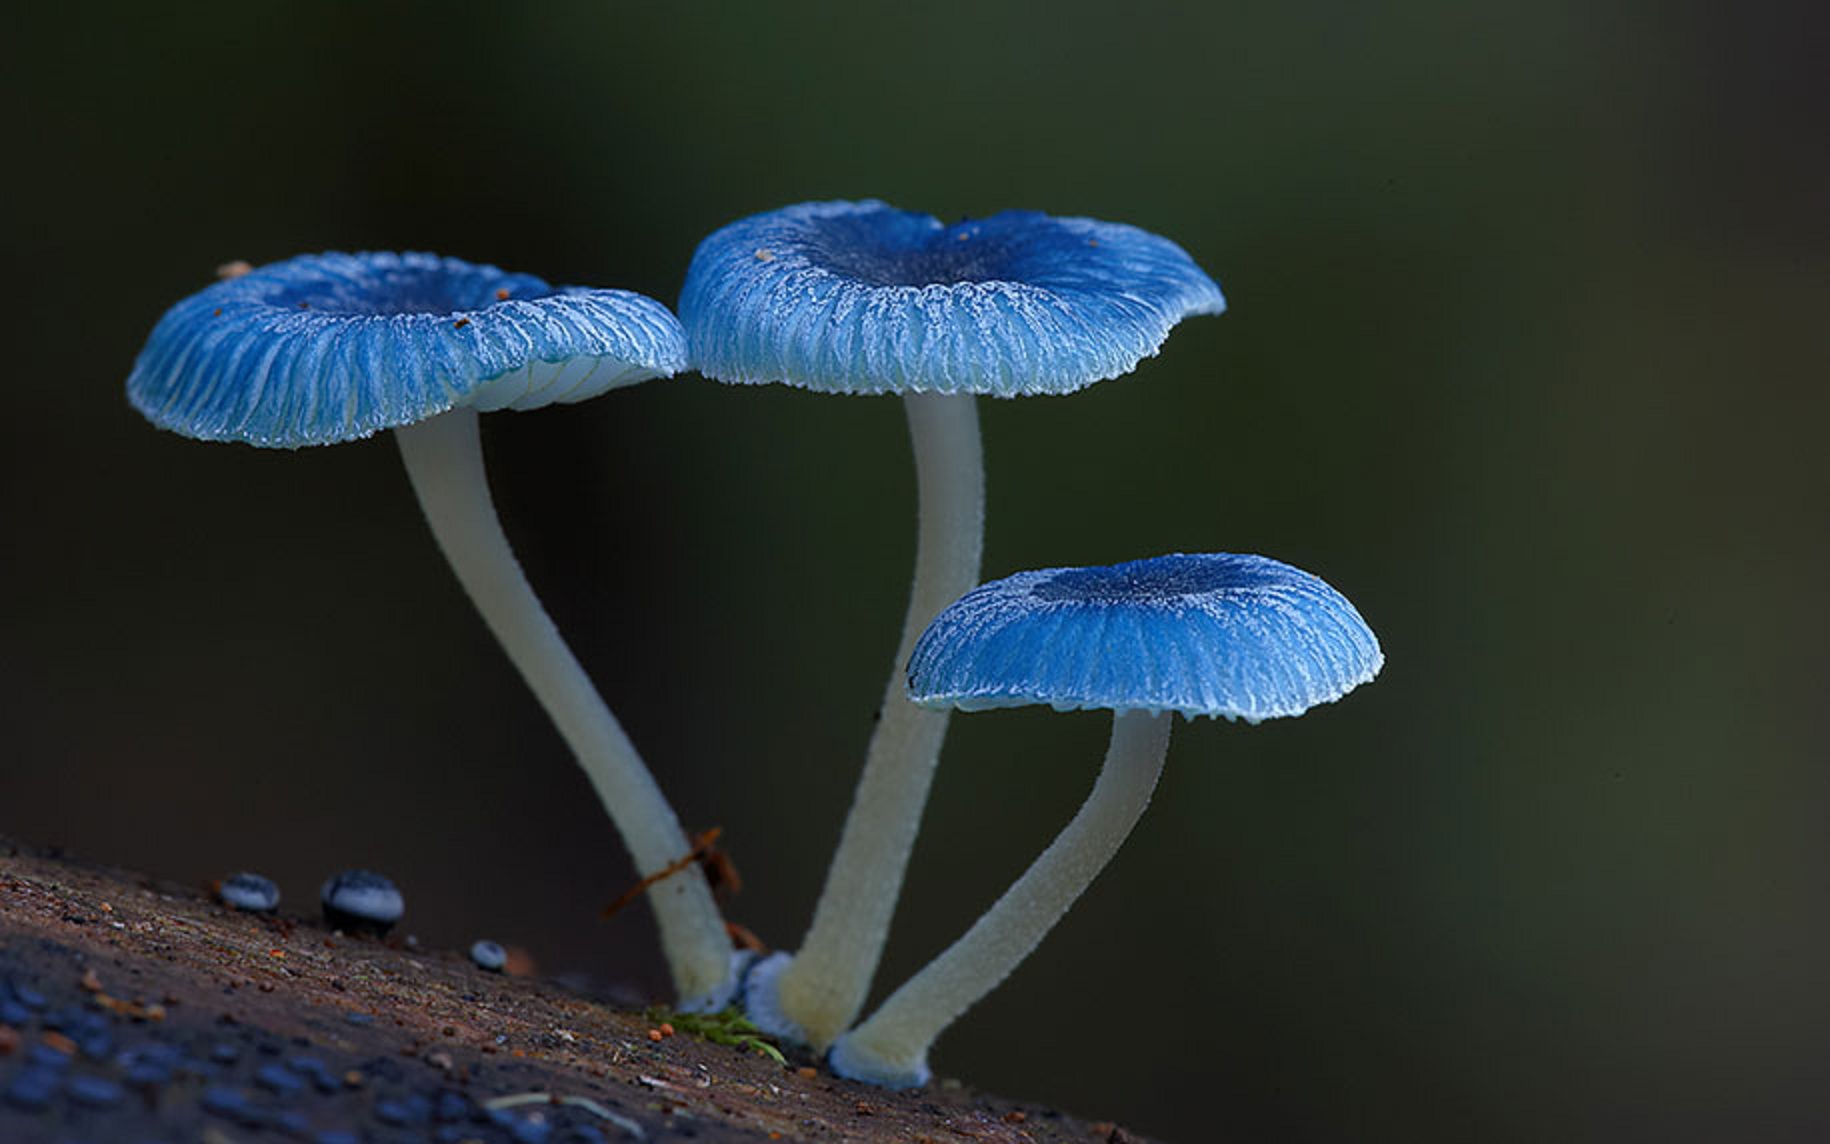 fungi-mushrooms-photography-steve-axford-24.jpg